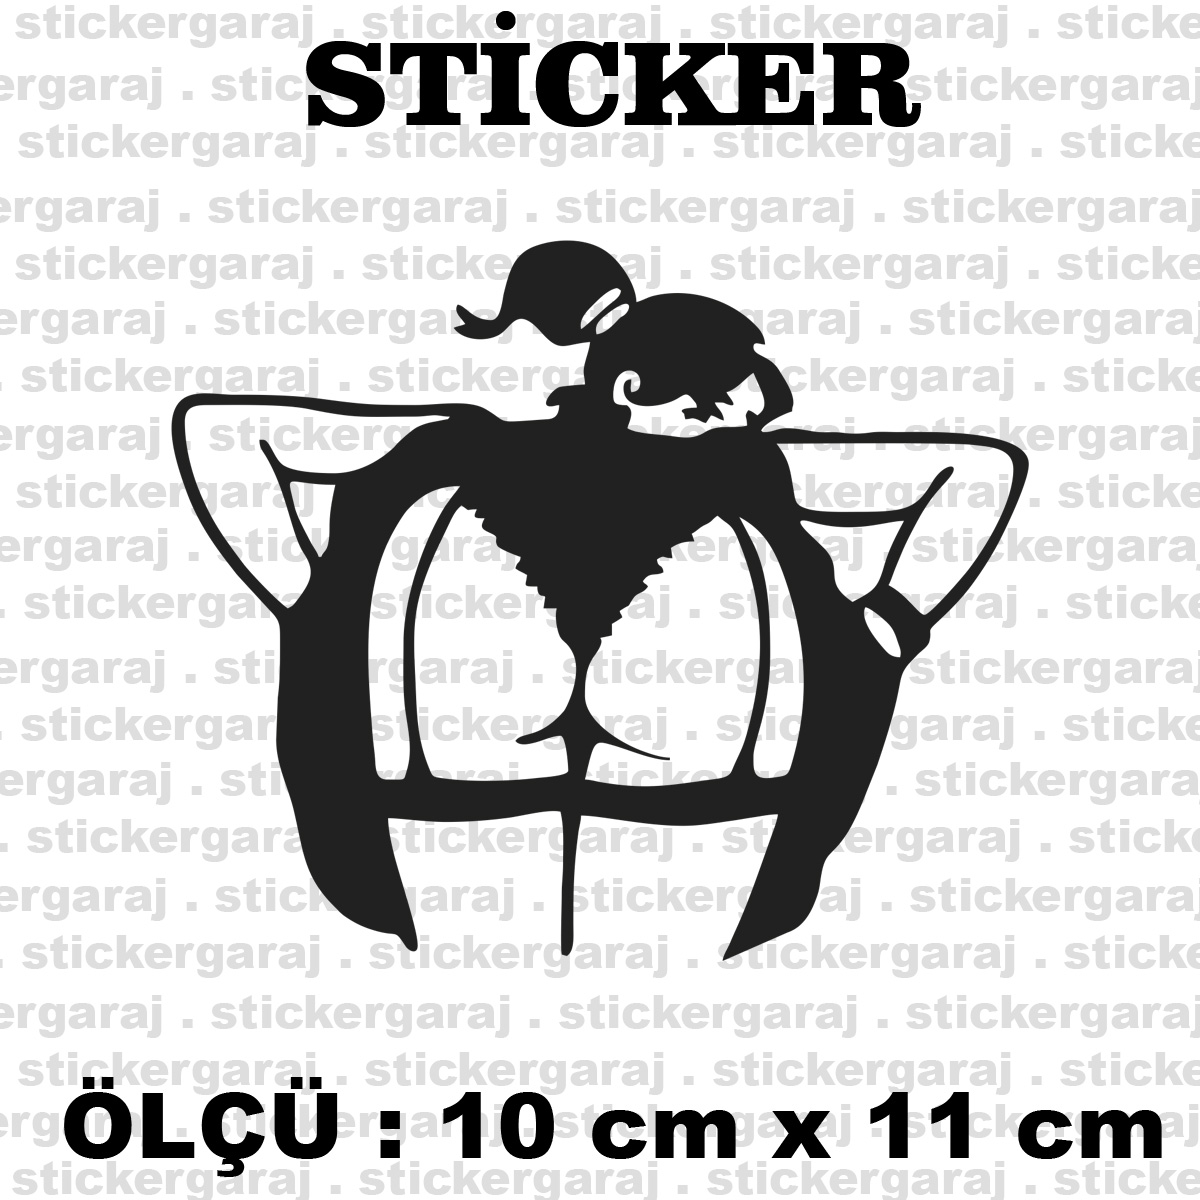 kalca 11 10cm - Komik popo sticker